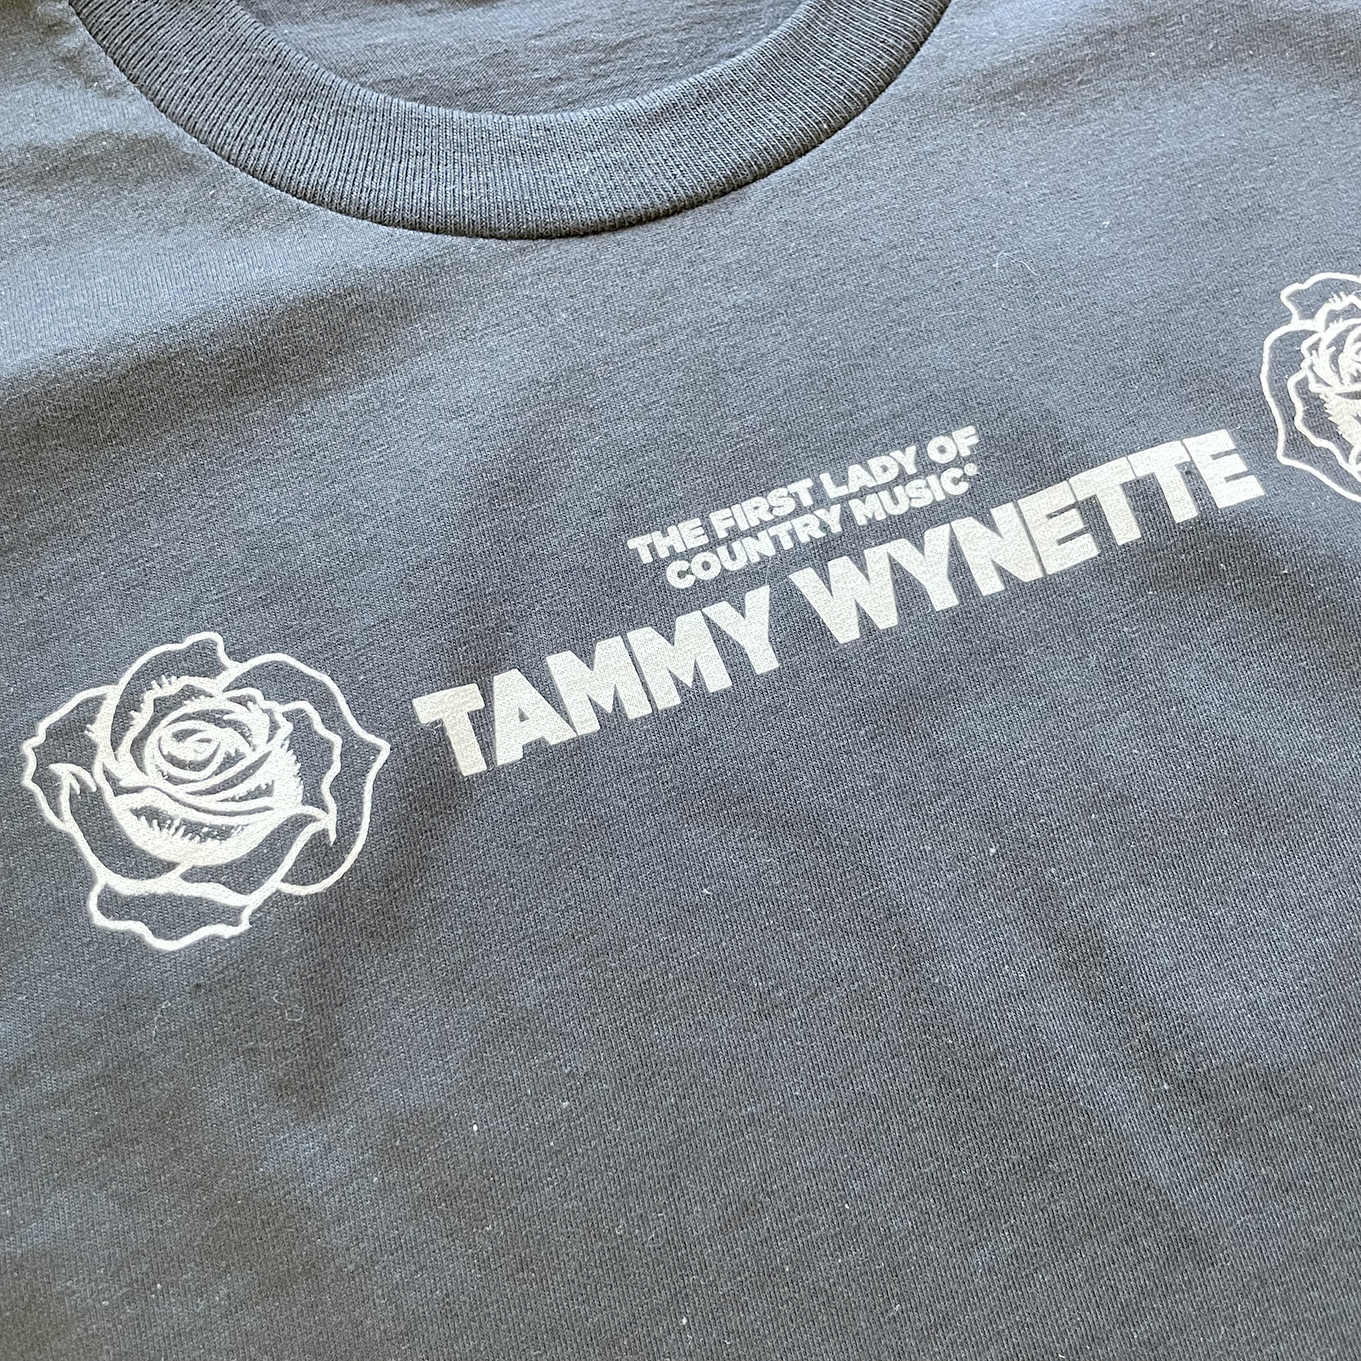 Camisa Manga Corta Tammy Wynette